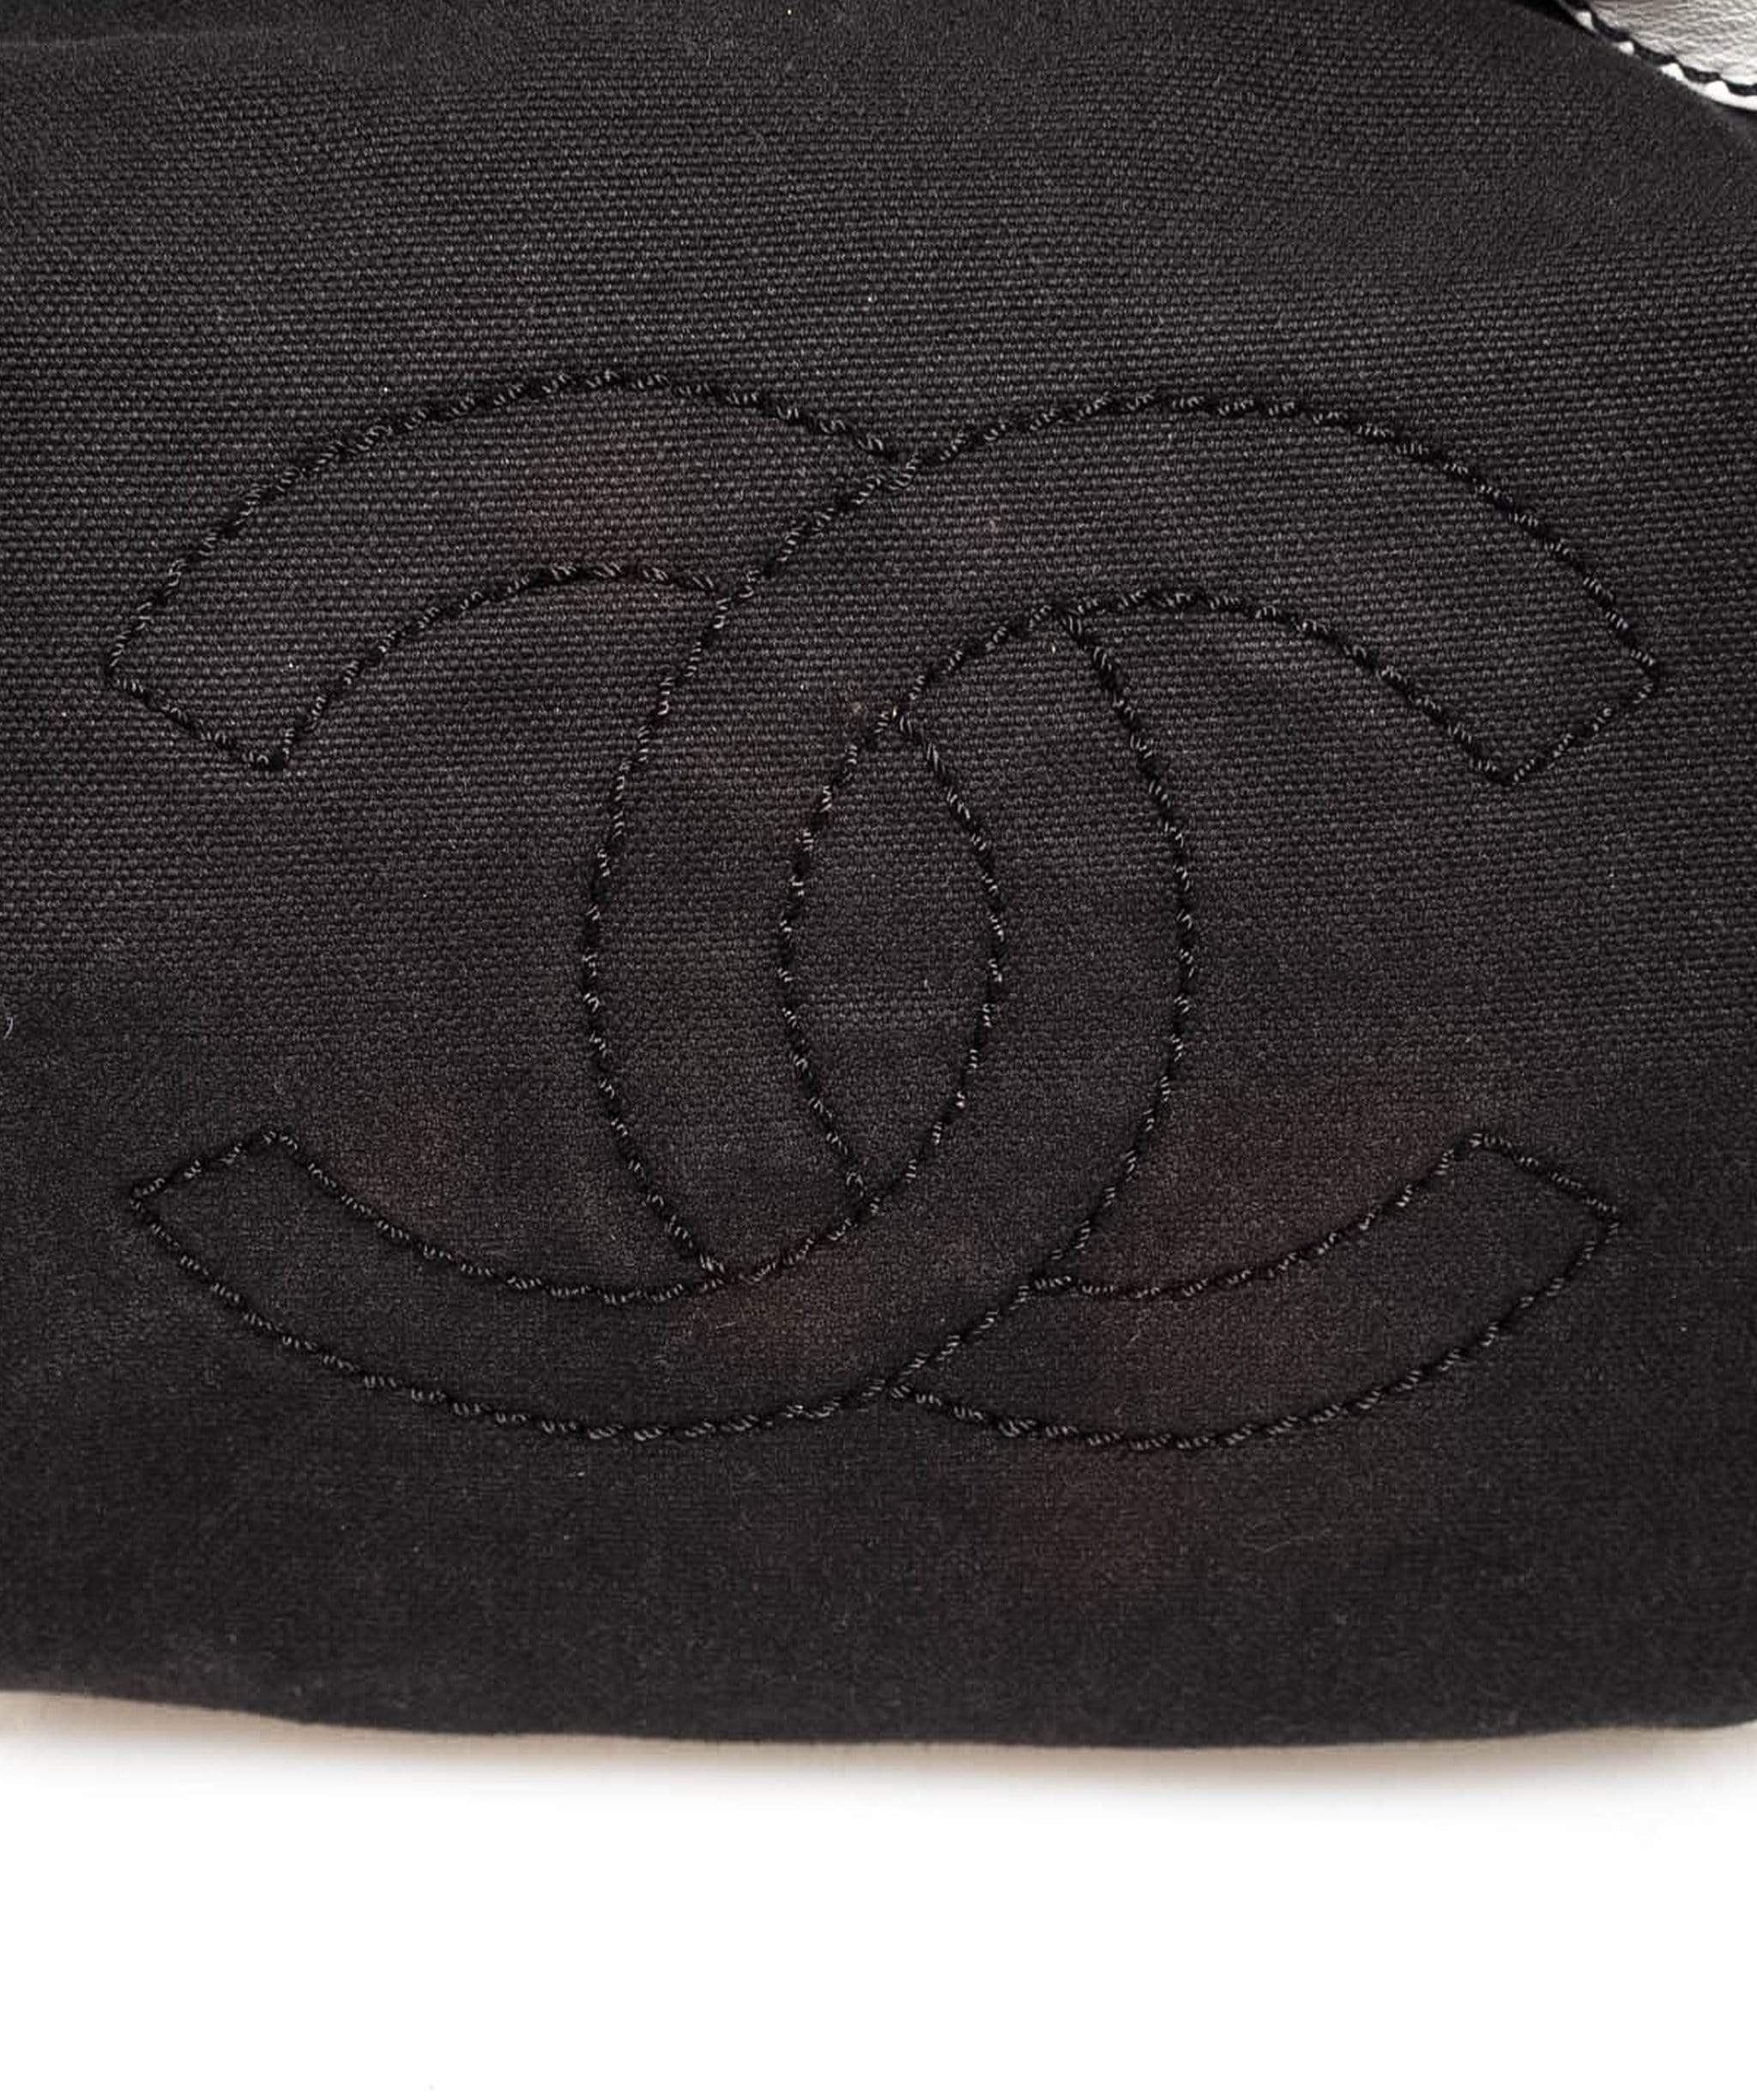 Chanel Chanel Black & White Canvas Olsen Chain Tote Bag - AWL1978